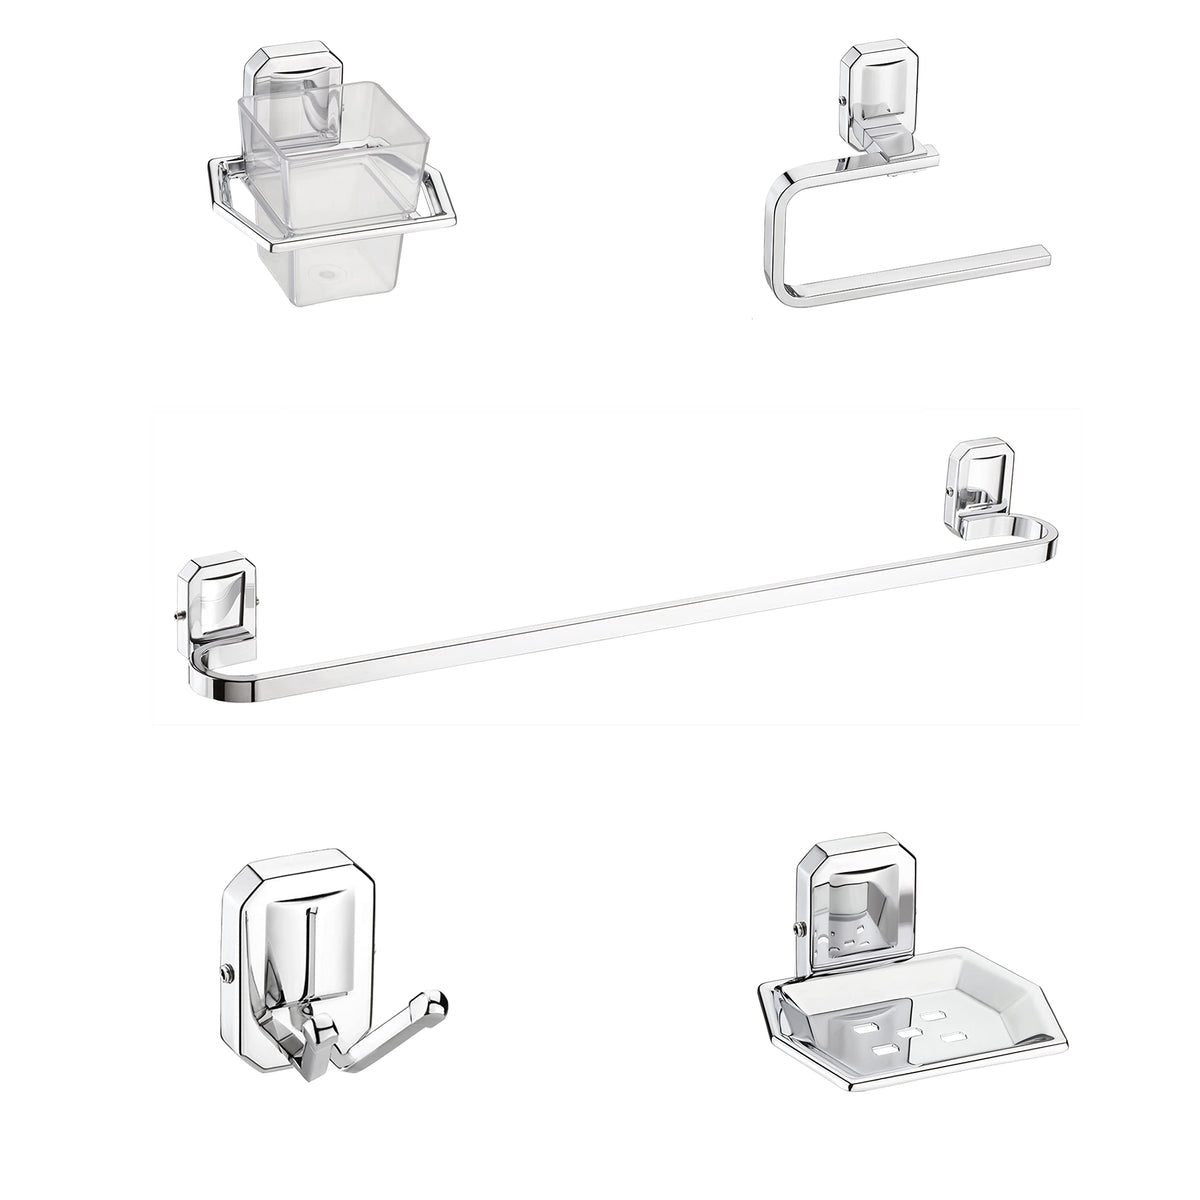 Plantex Stainless Steel 304 Grade Bathroom Accessories Set/Bathroom Hanger for Towel/Towel Bar/Napkin Ring/Tumbler Holder/Soap Dish/Robe Hook (Cute - Pack of 5)